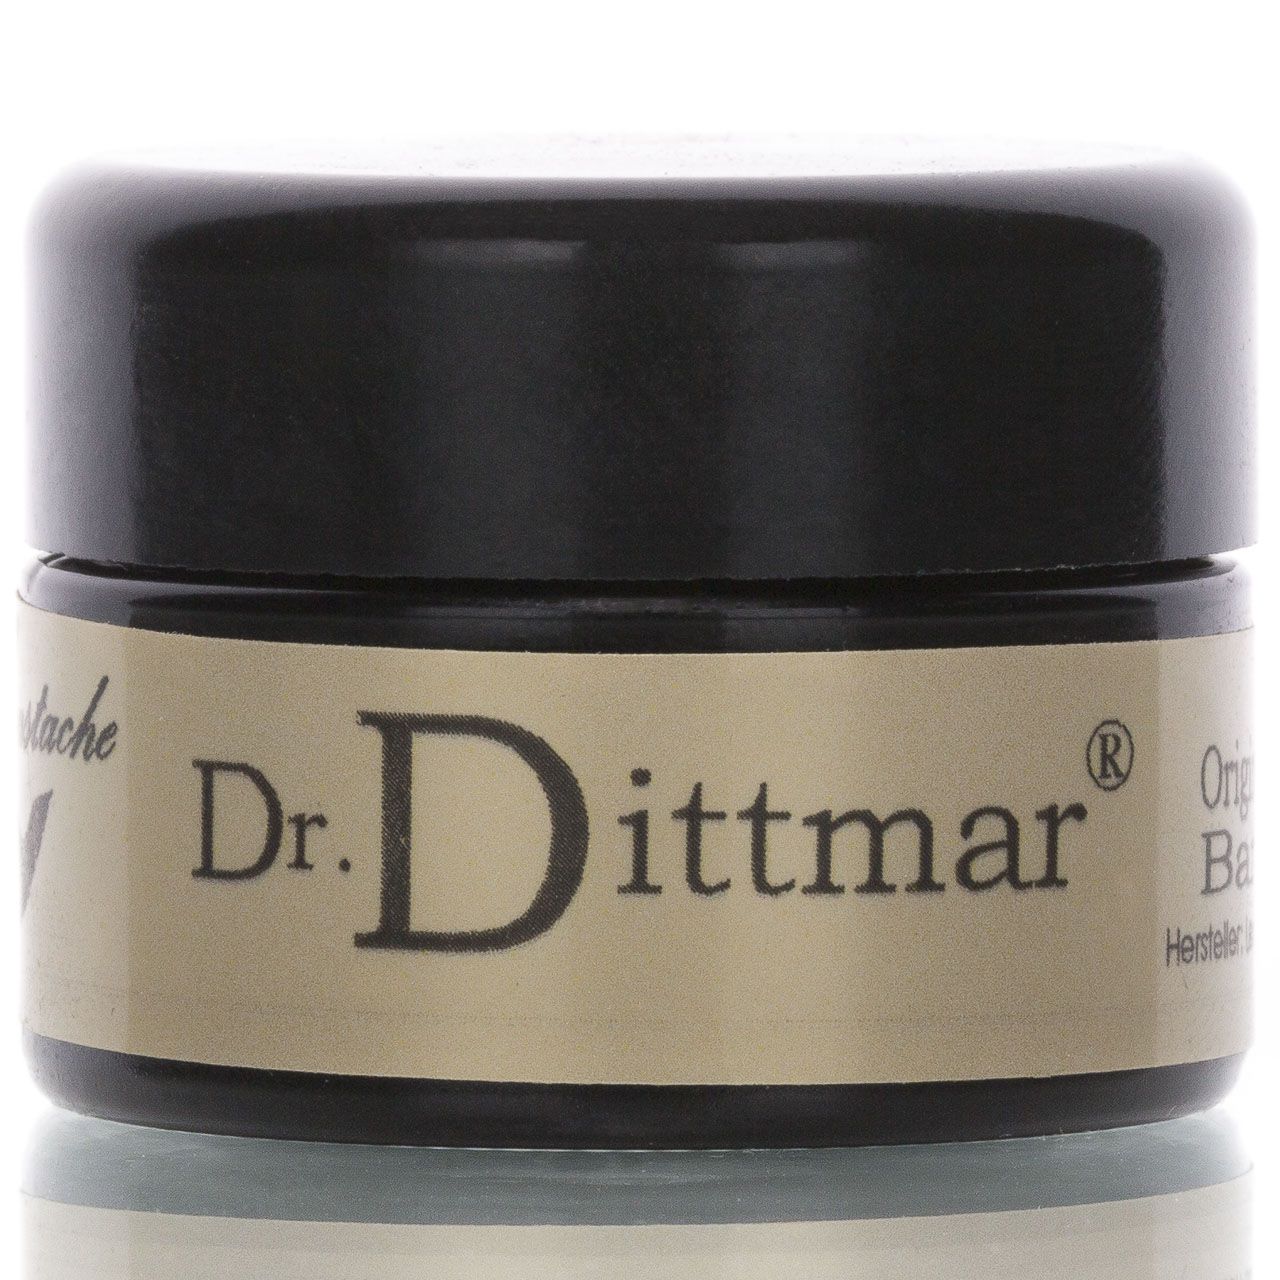 Dr. Dittmar Original ungarische Bartwichse 16ml | Bartpflege | blackbeards